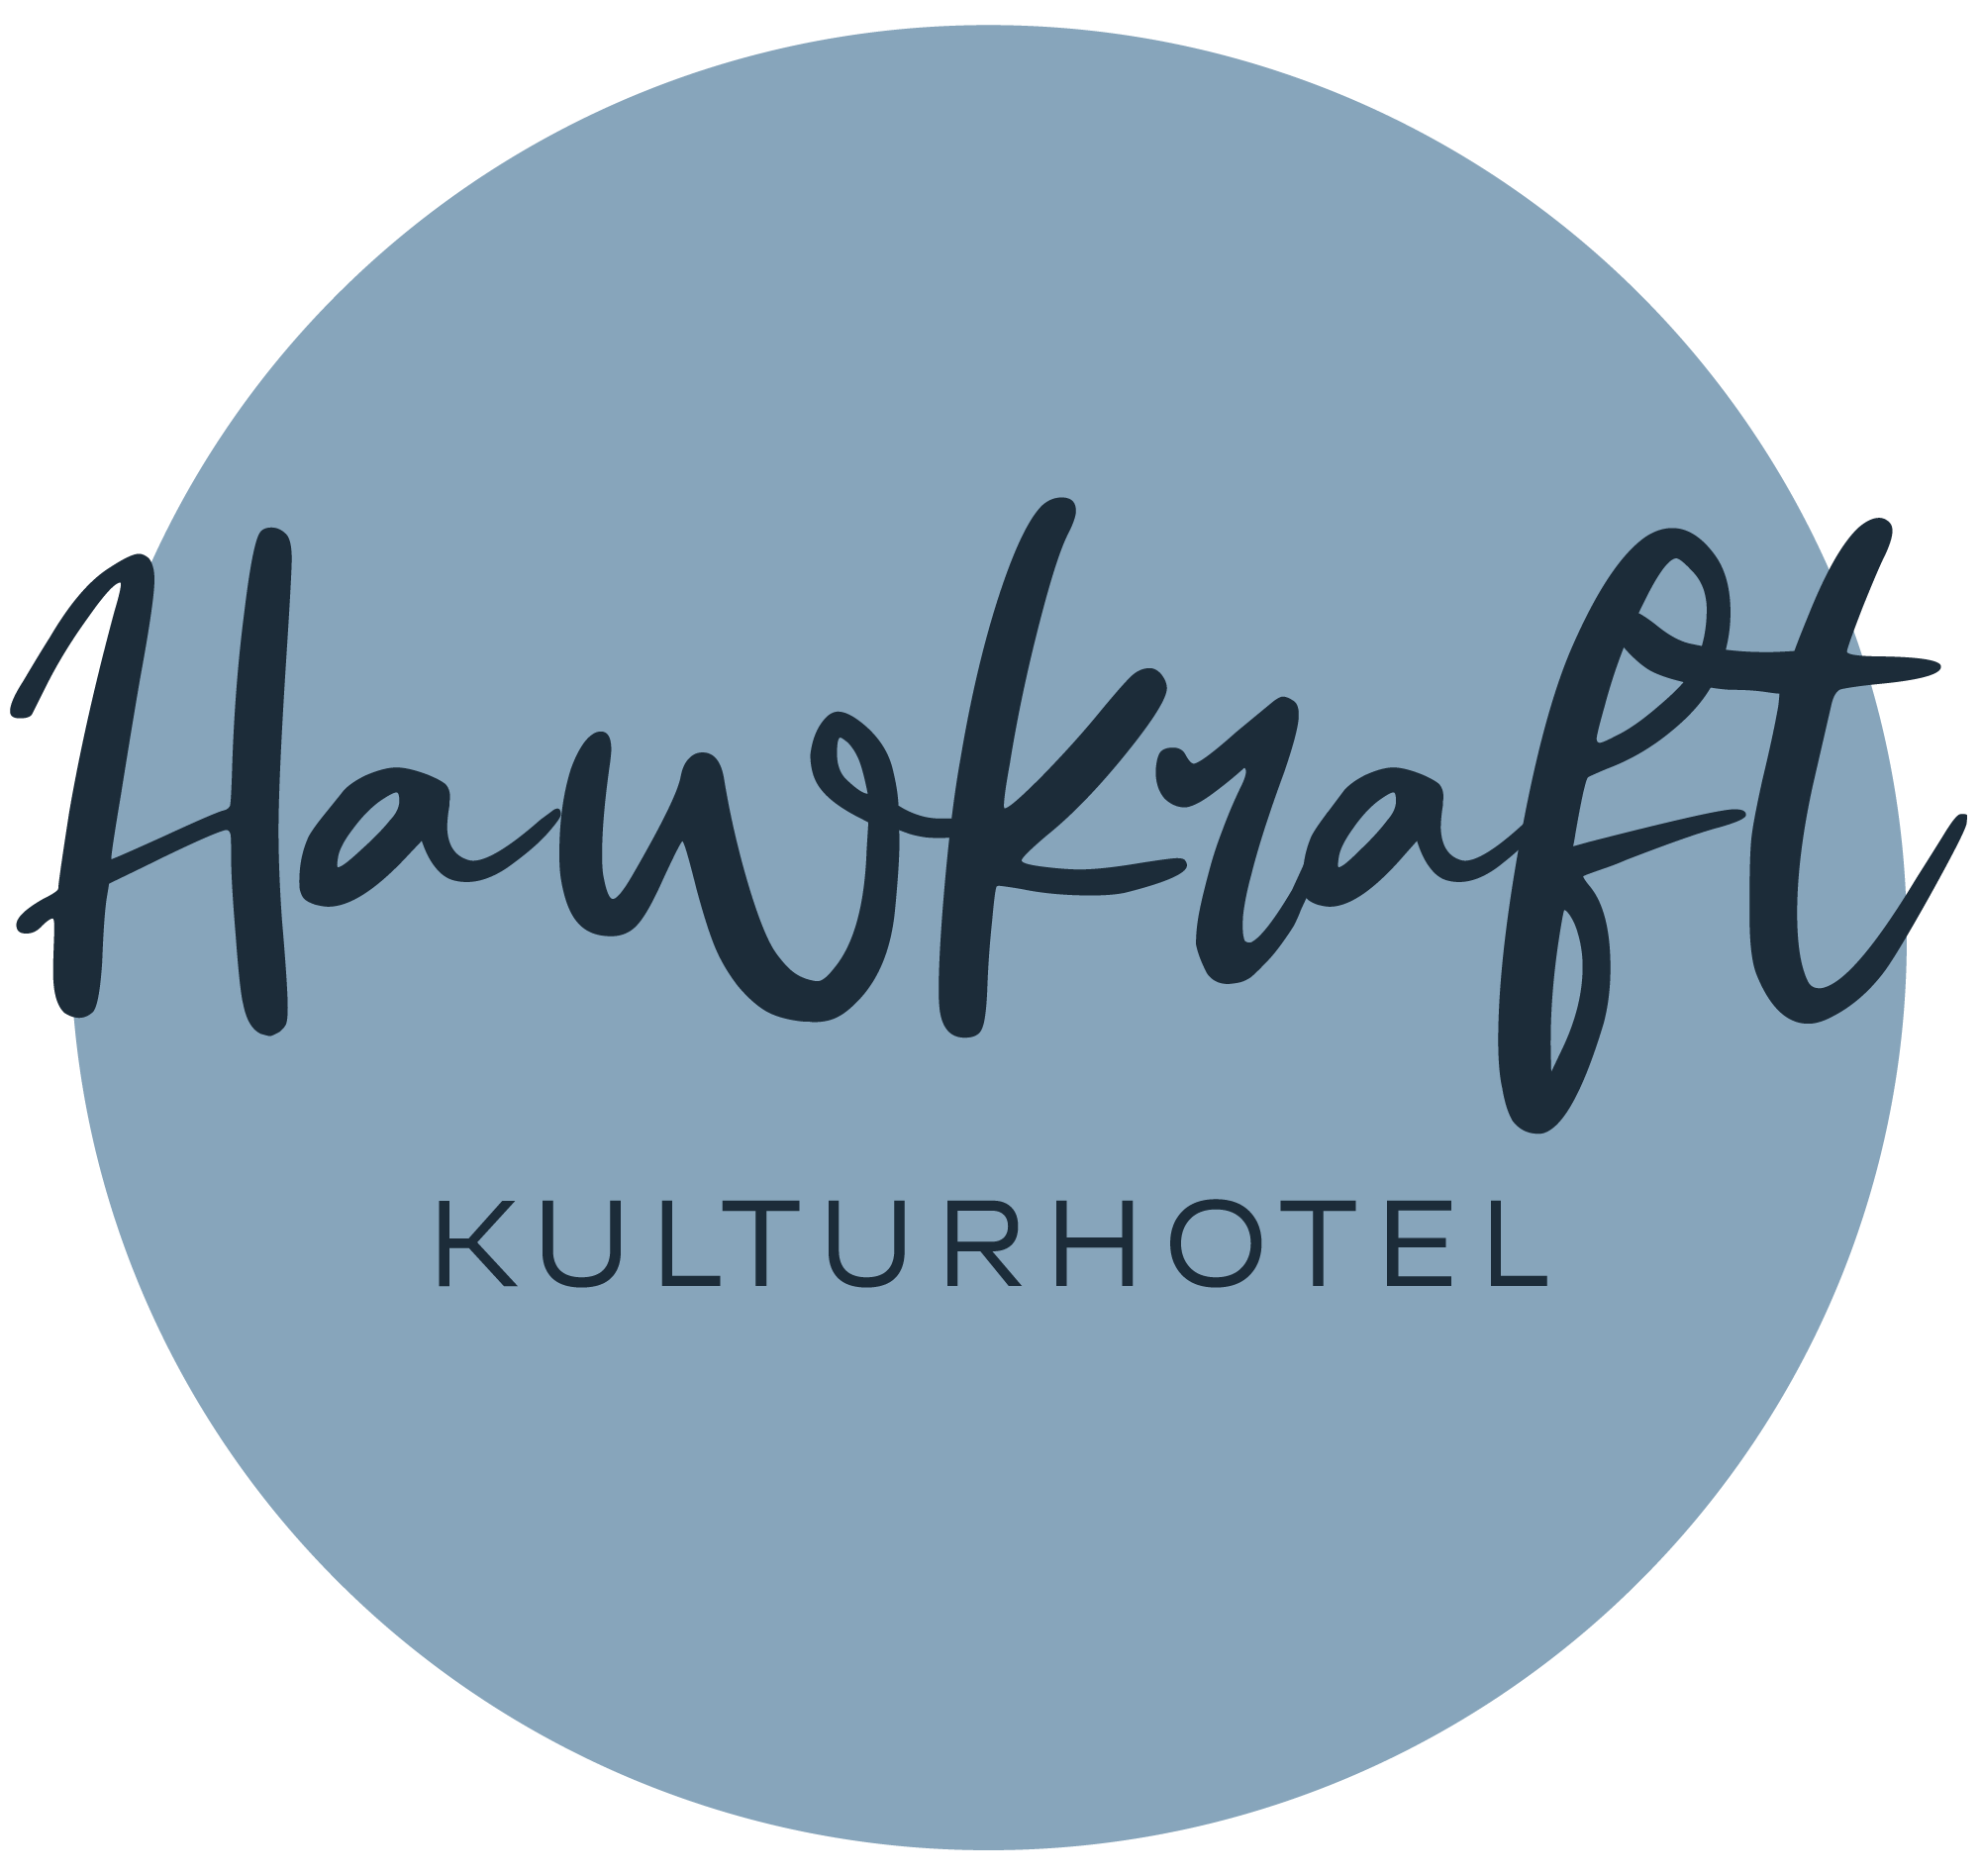 Hawkraft Kulturhotel logo